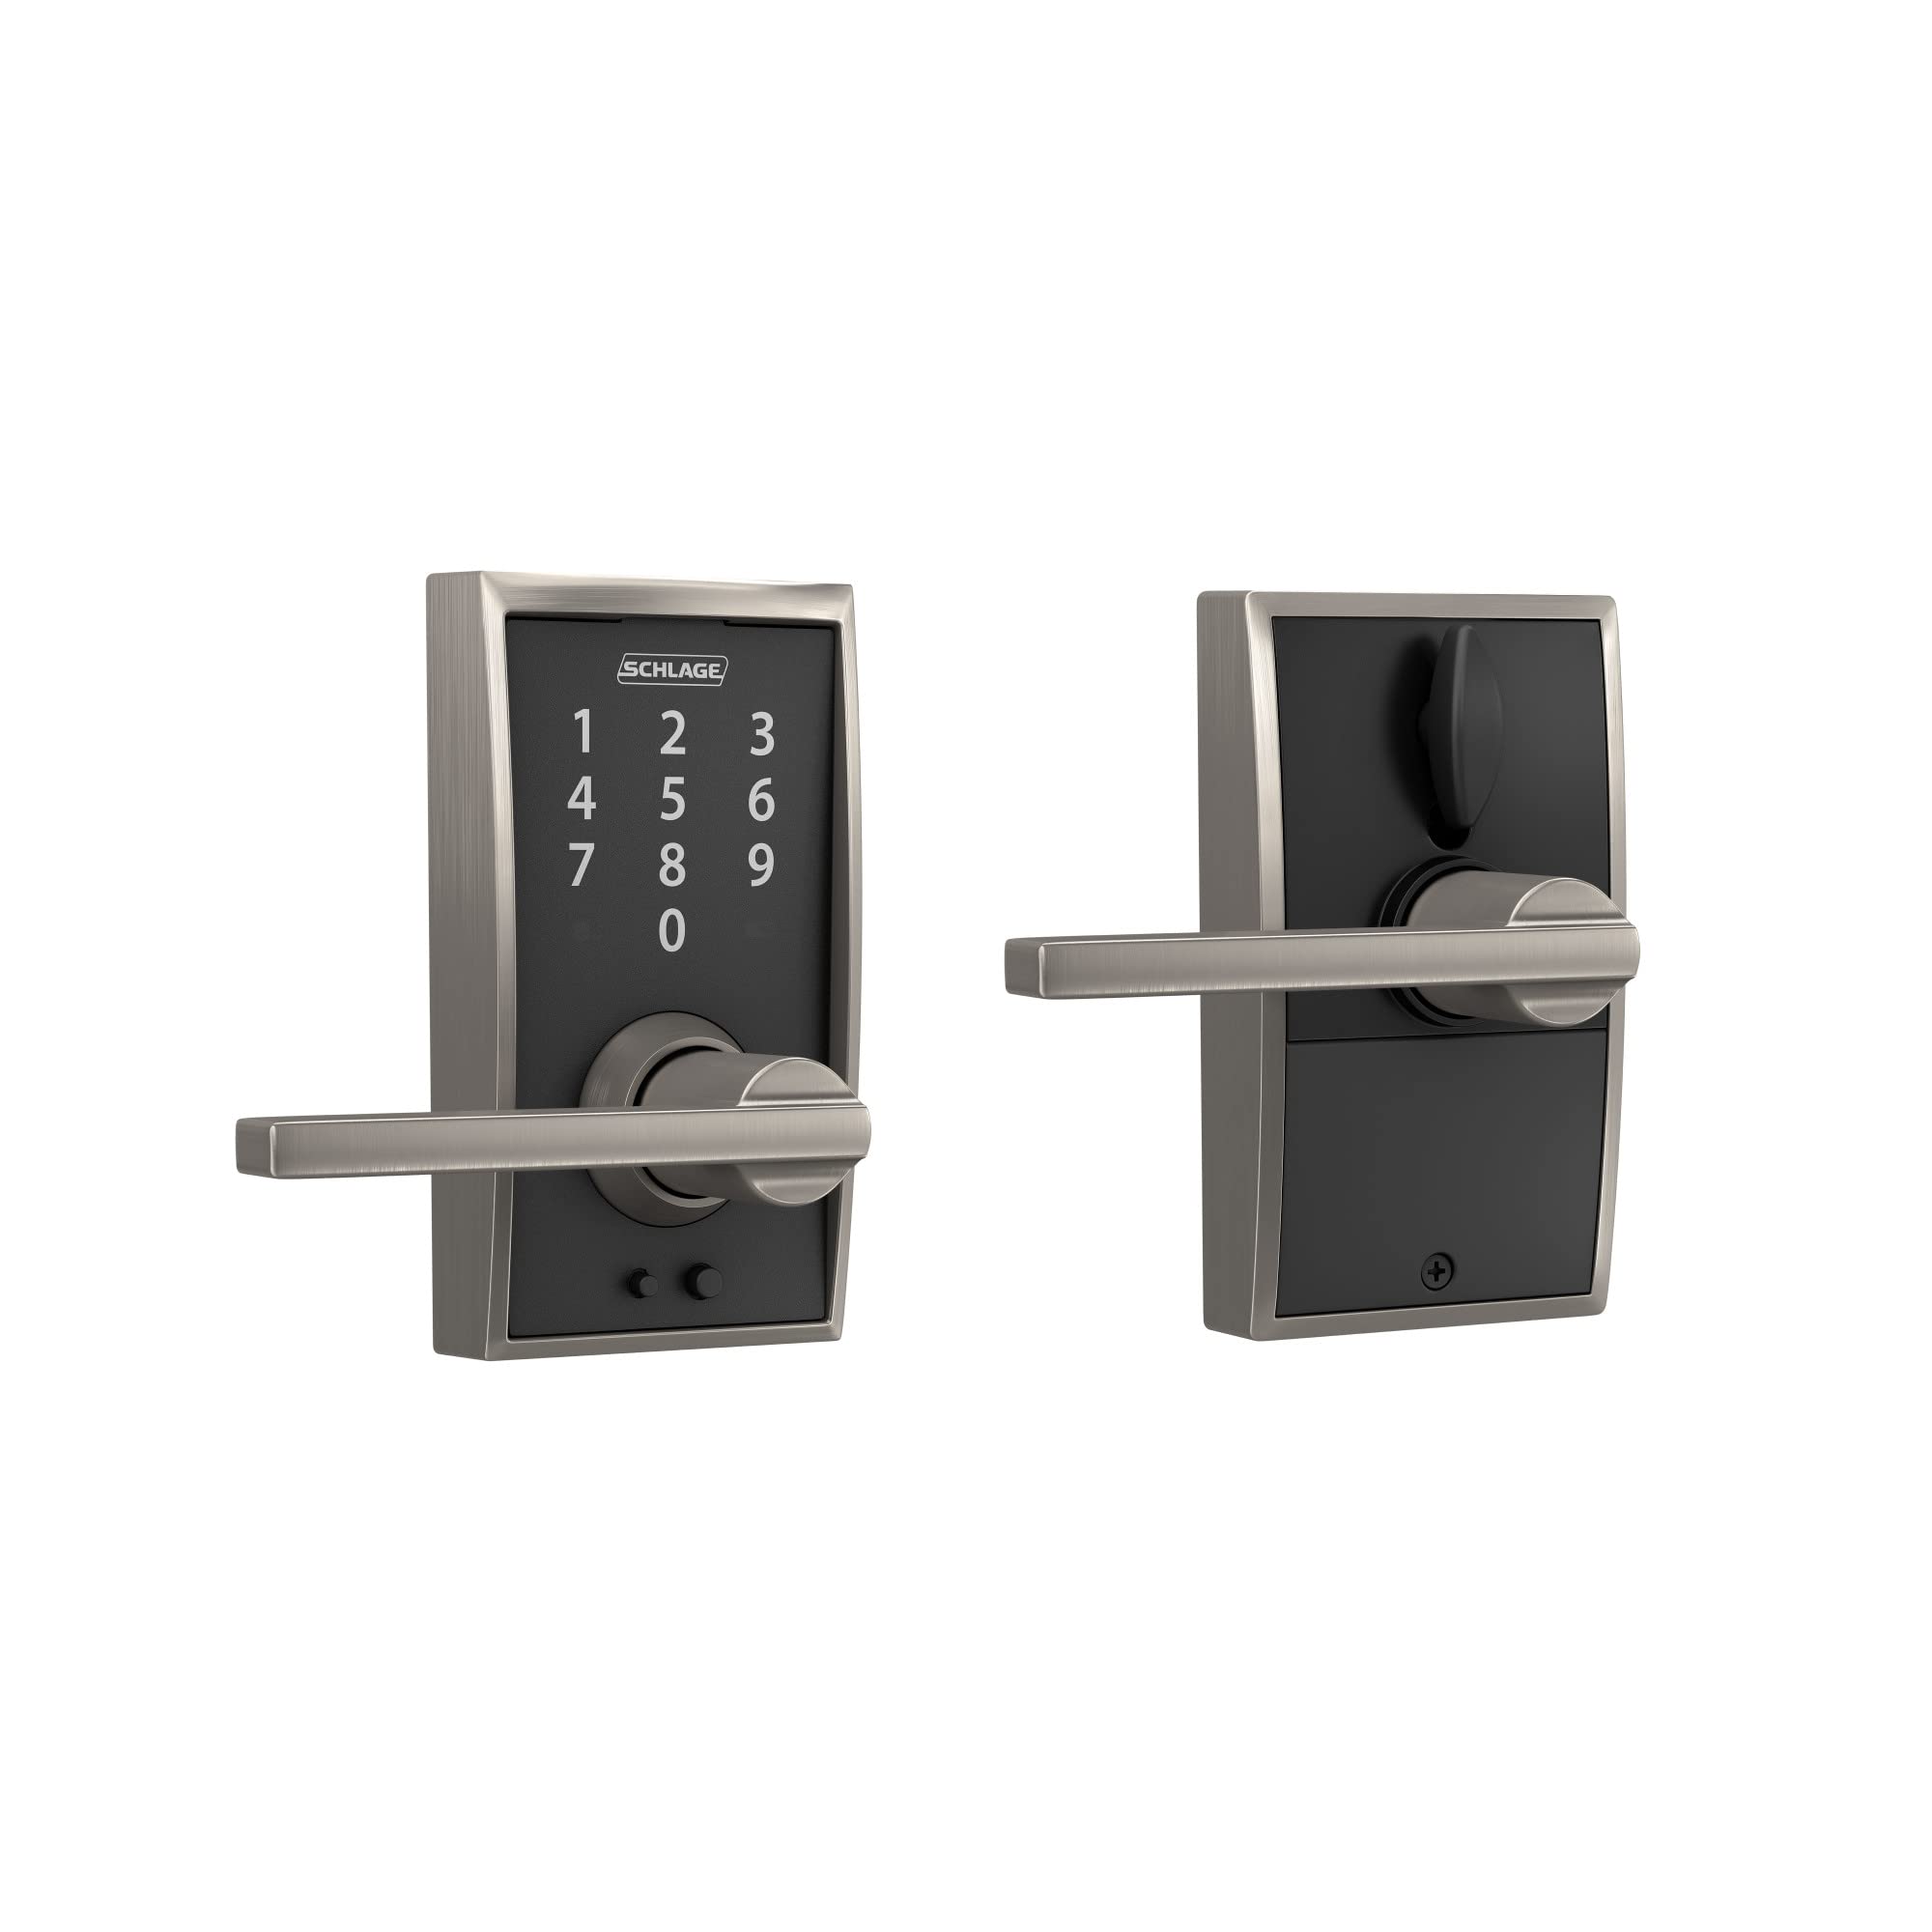 Schlage FE695 CEN 619 LAT Touch Century Lock with Latitude Lever, Electronic Keyless Entry Lock, Satin Nickel